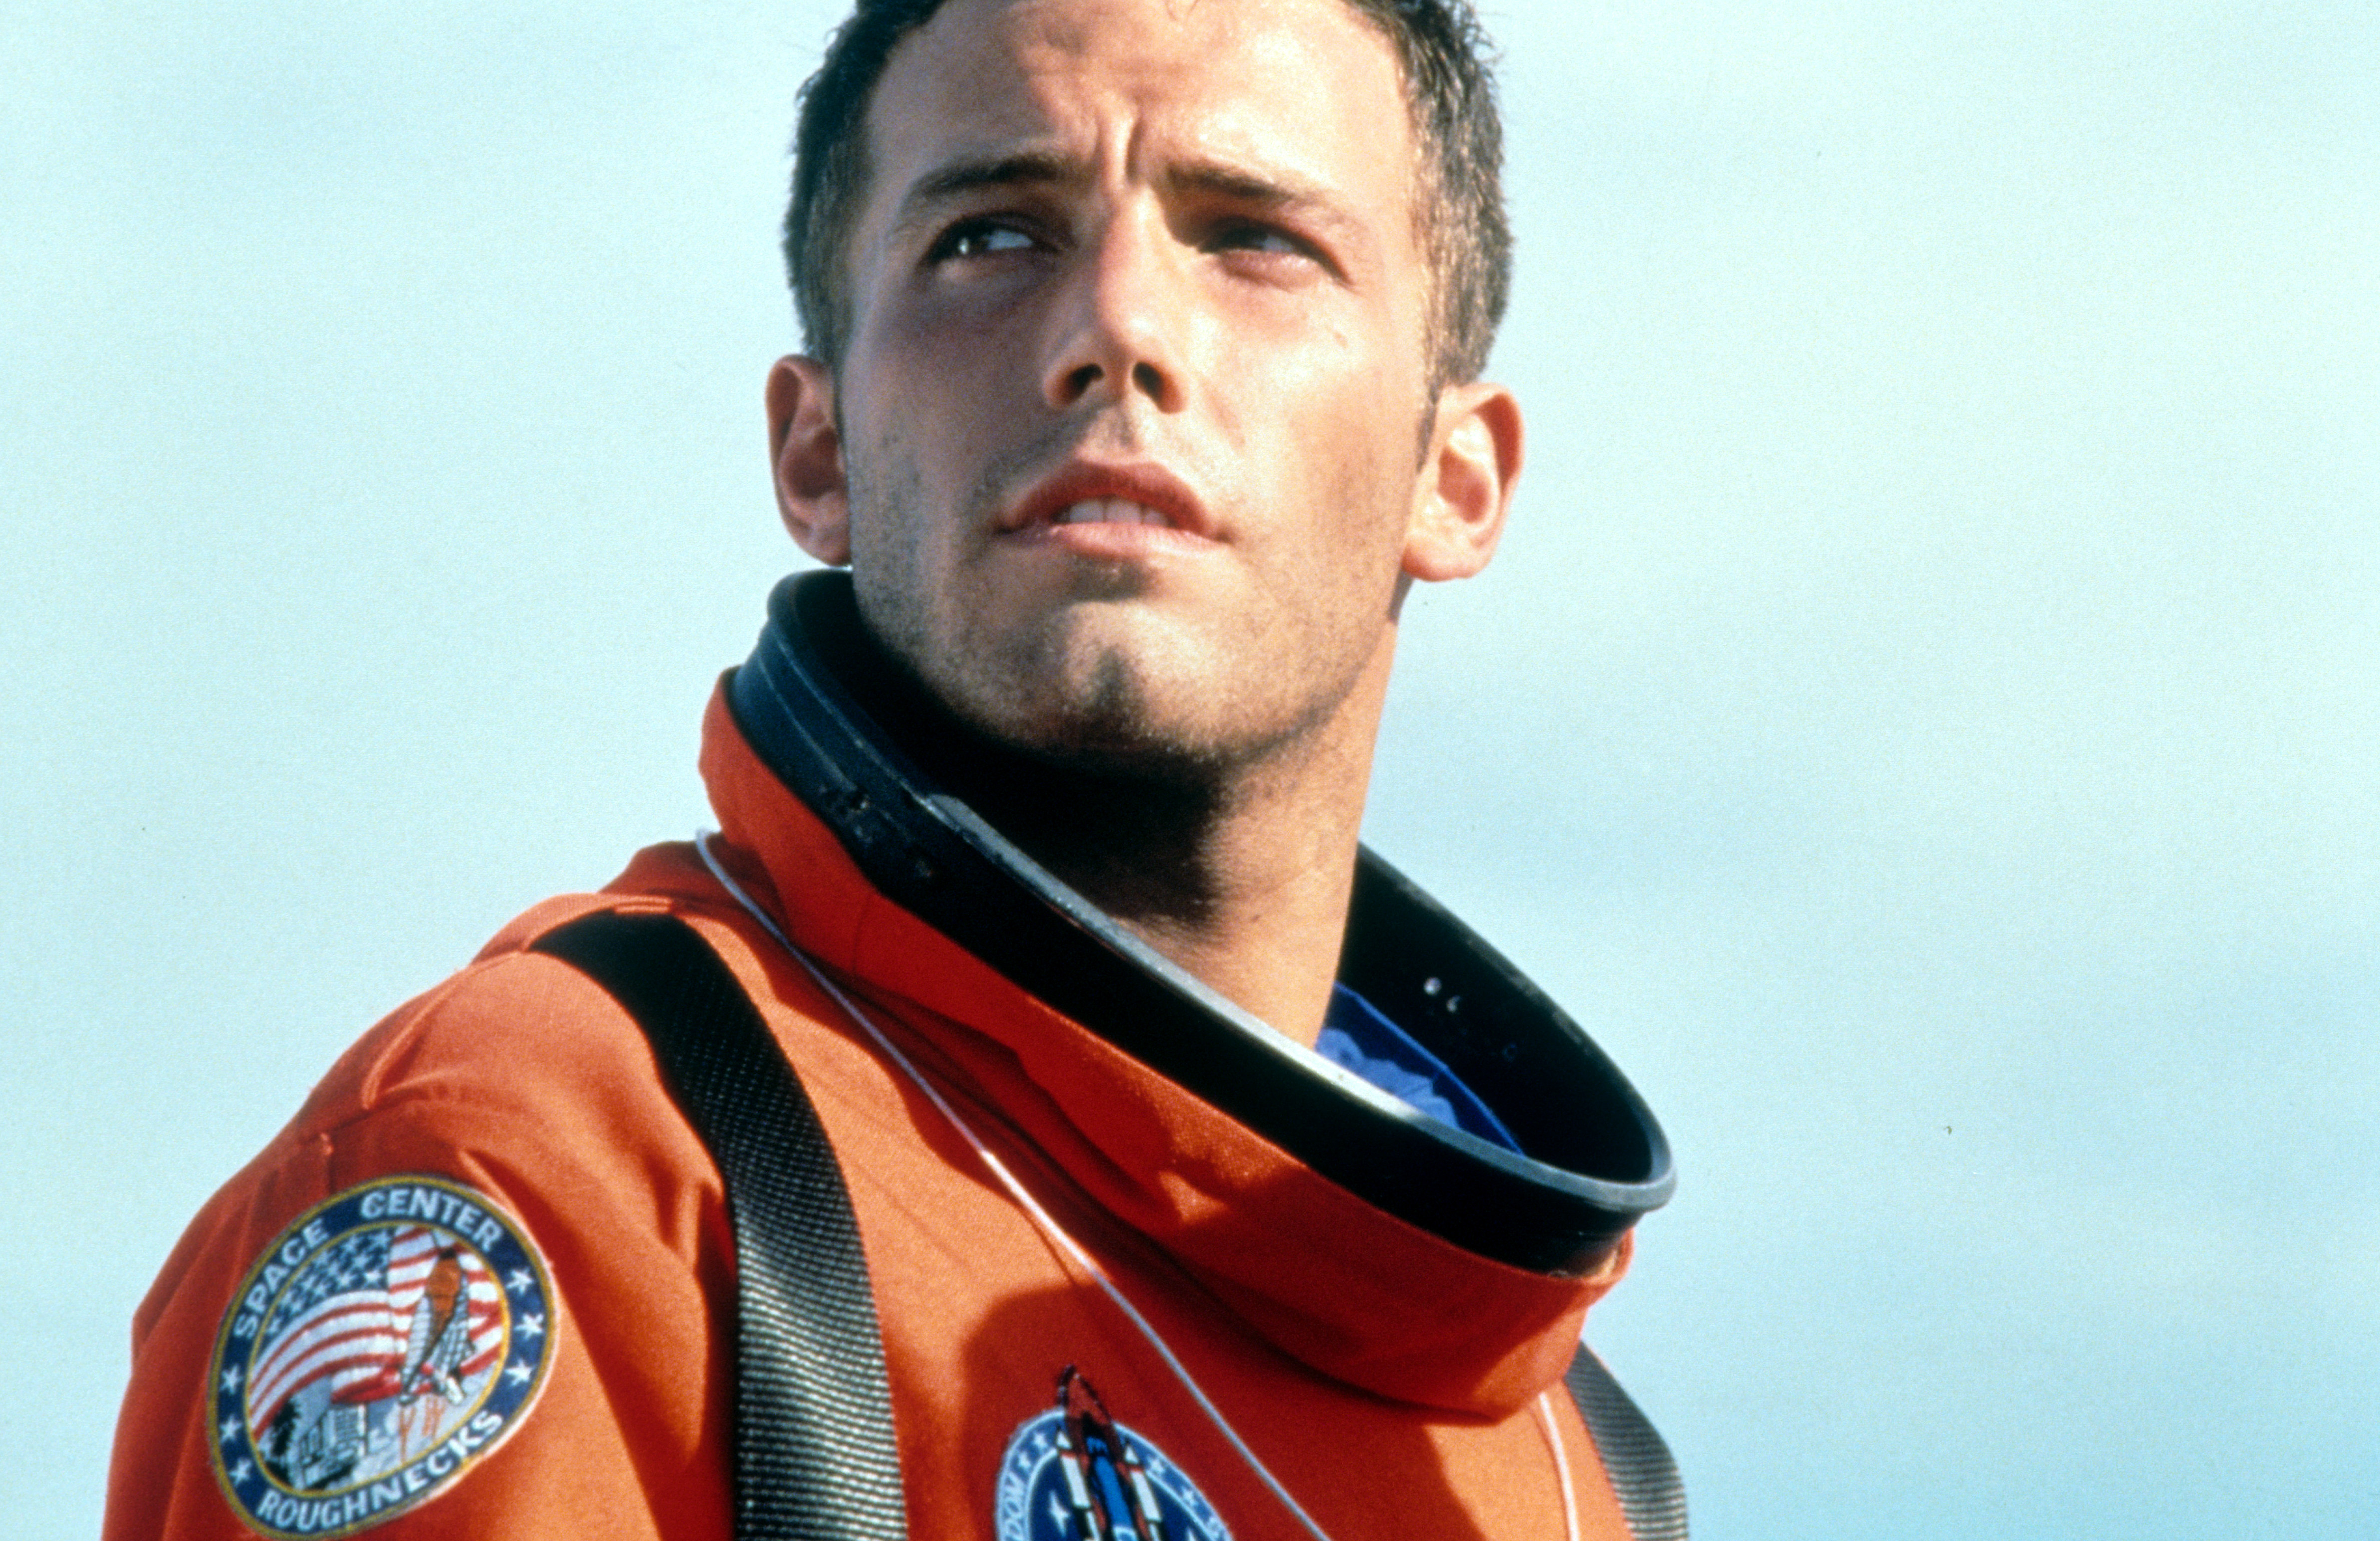 Ben Affleck in "Armageddon" in 1998. | Source: Getty Images